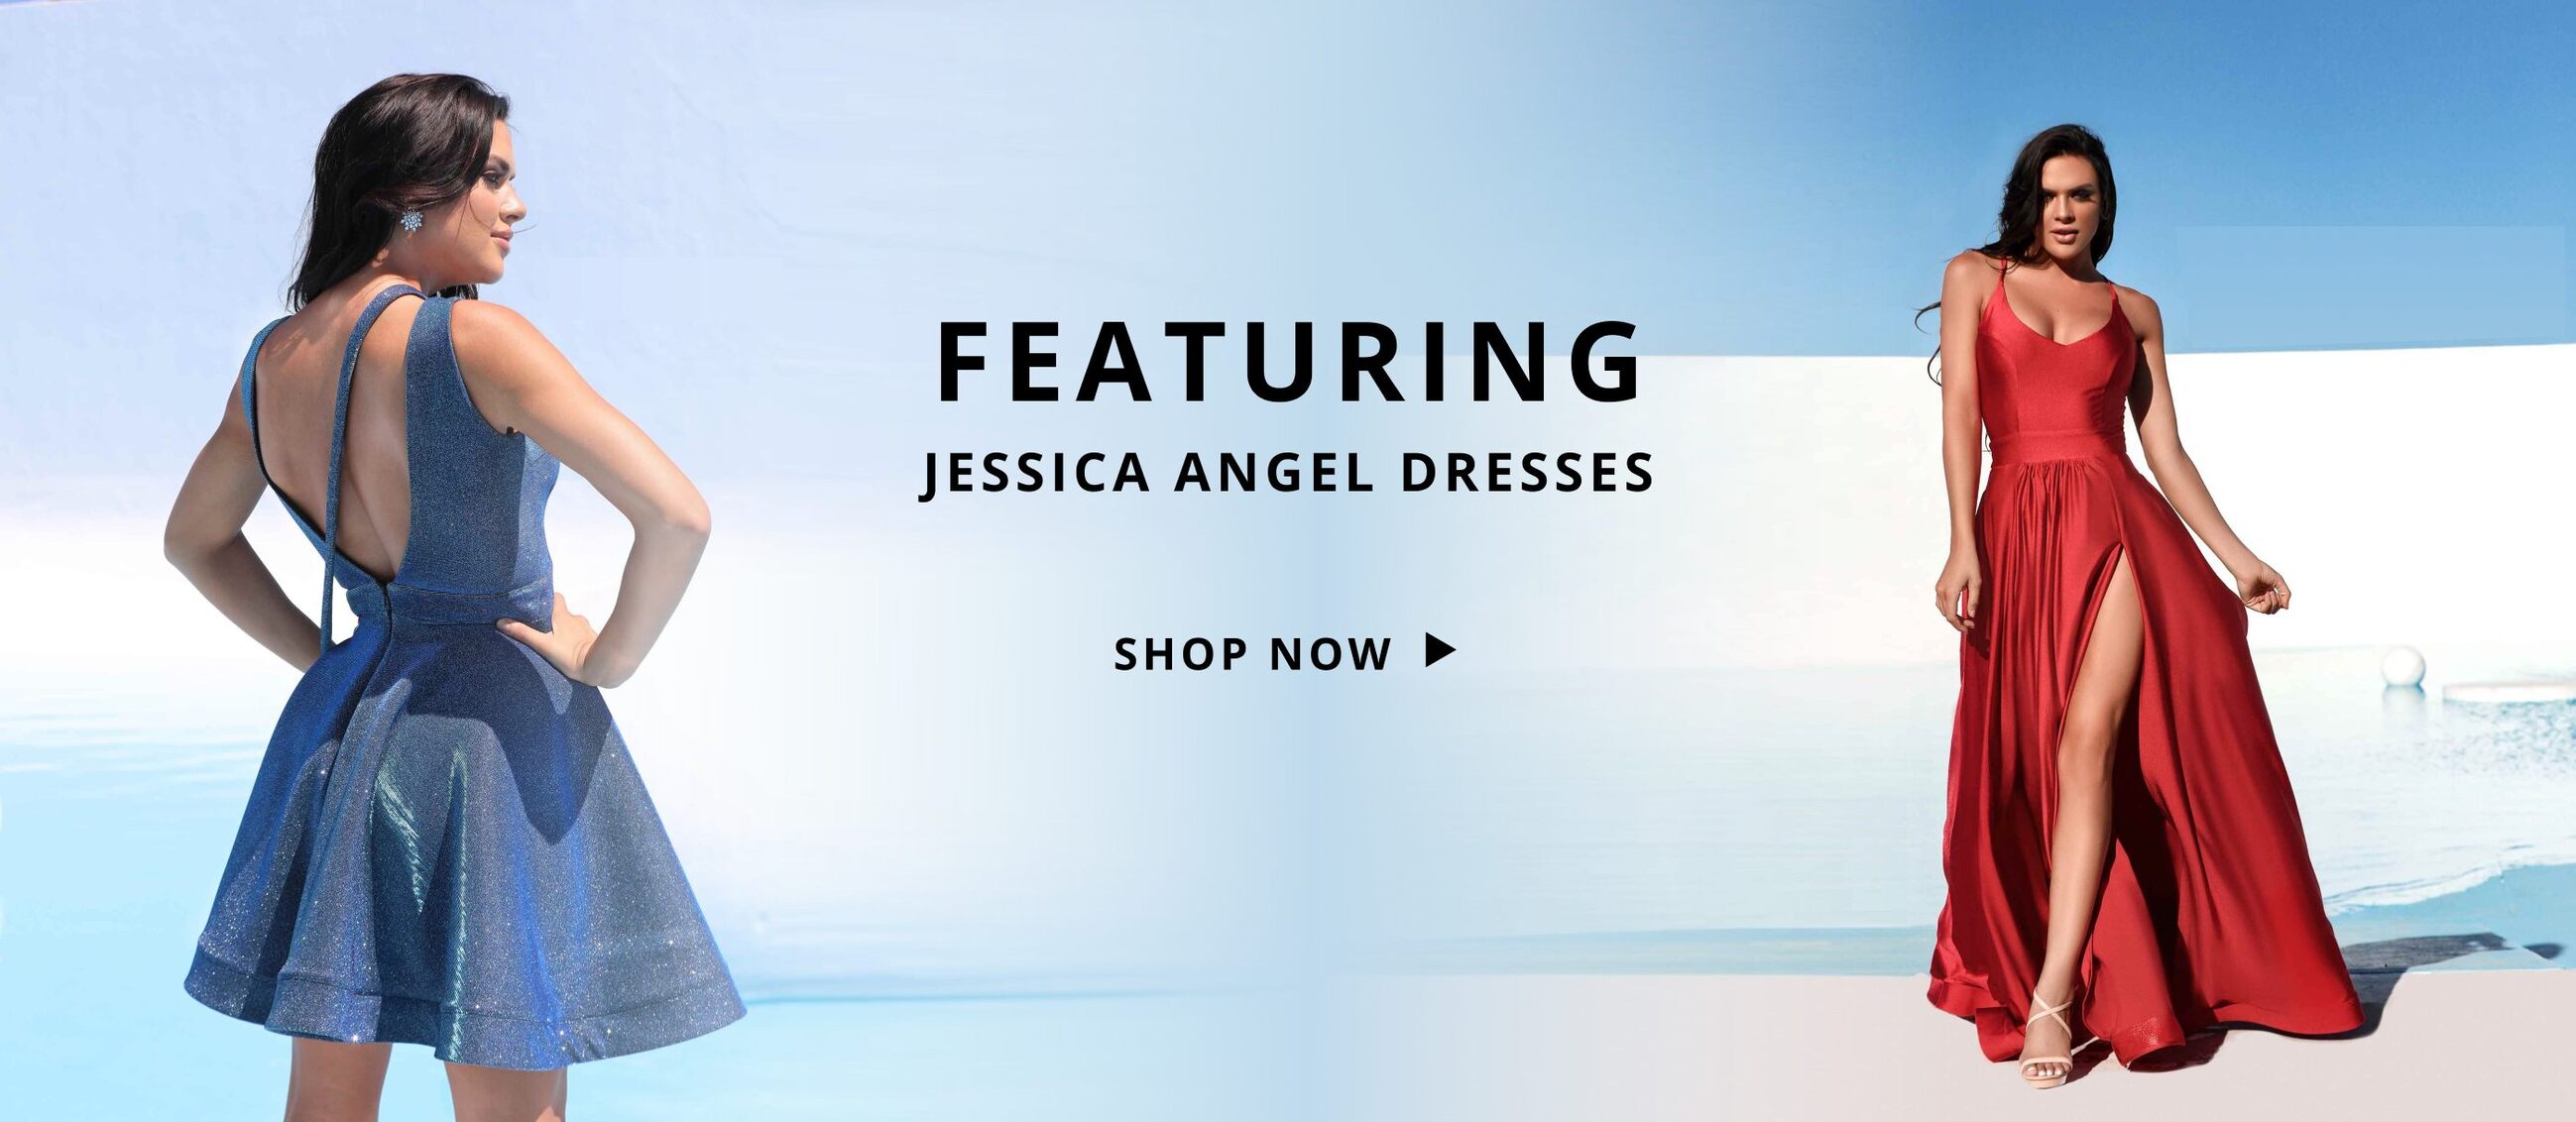 Jessica Angel dresses. Shop now. Desktop image